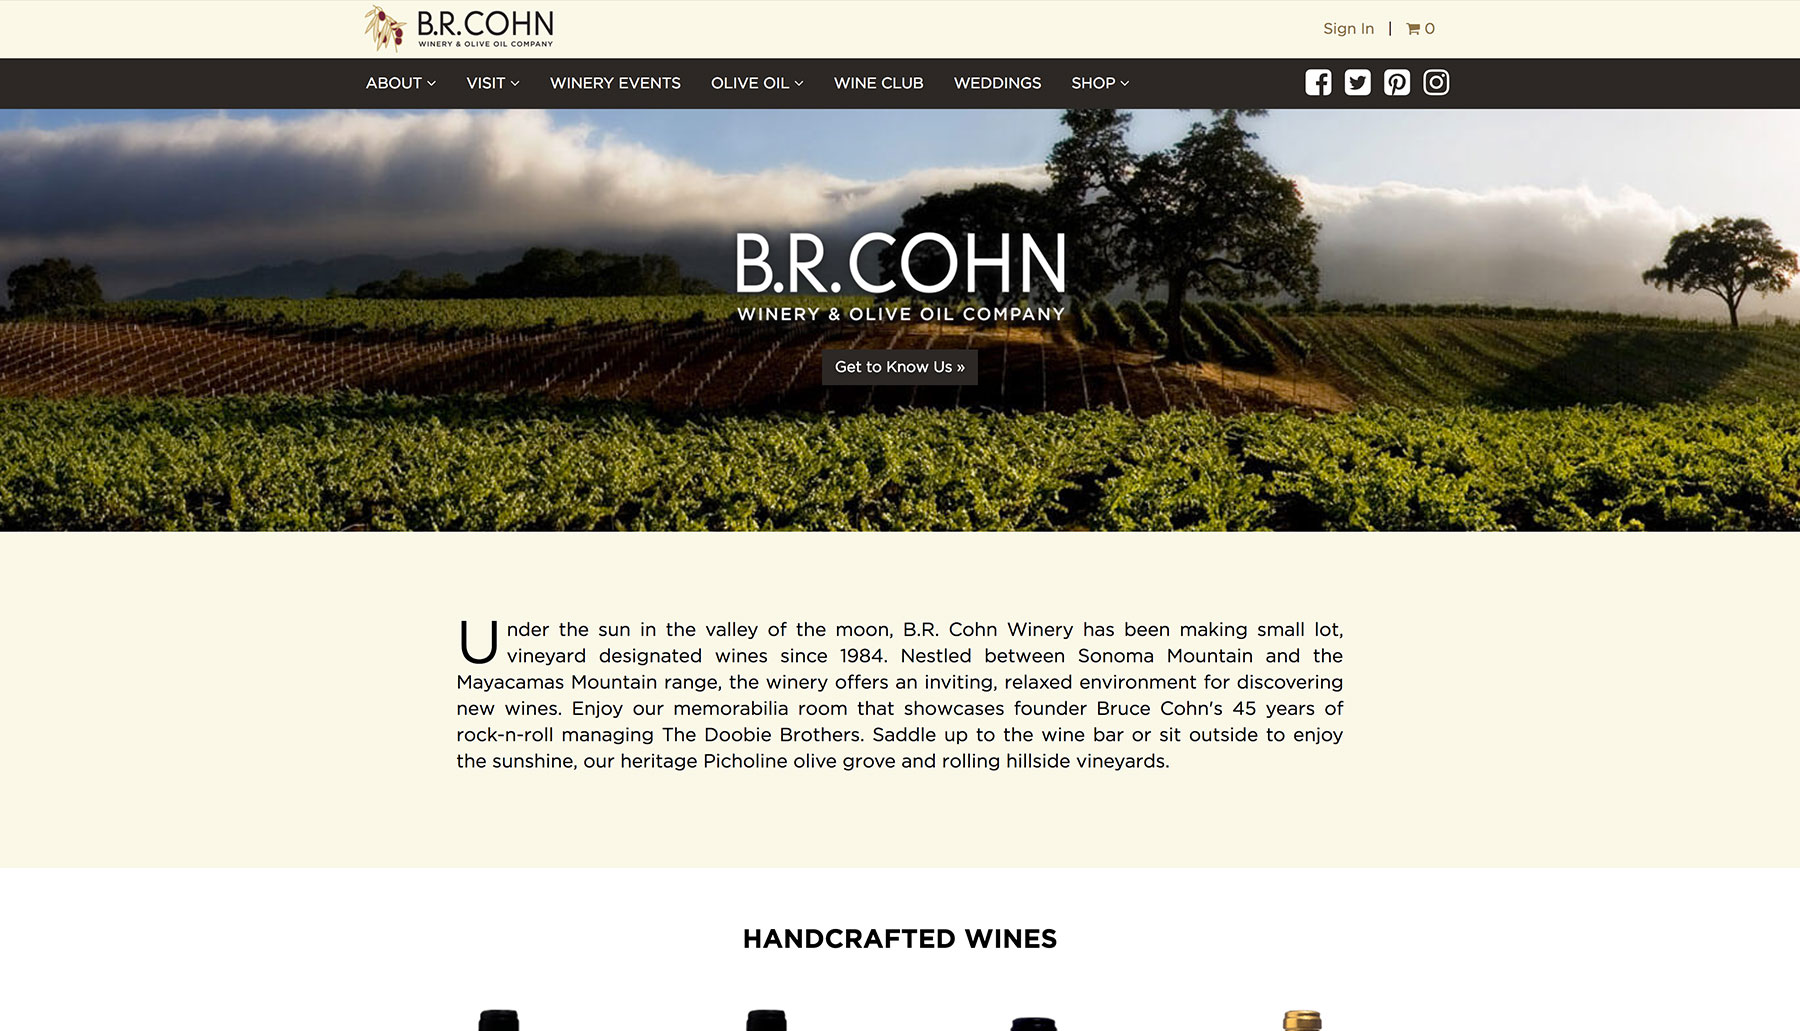 B.R. Cohn's home page